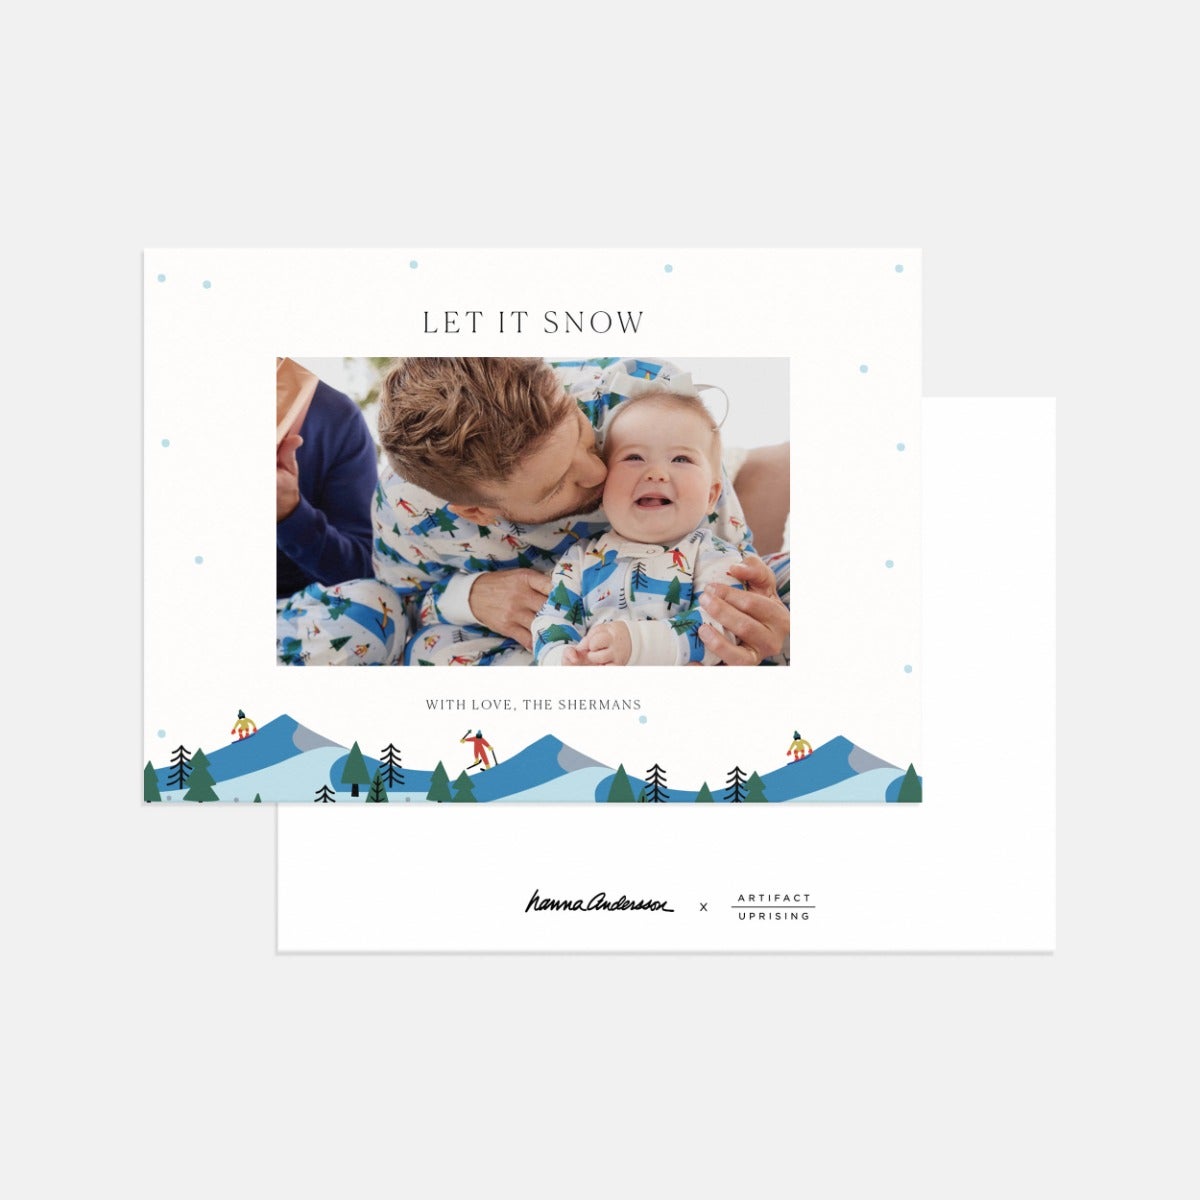 Hanna Andersson Ski Slope Holiday Card